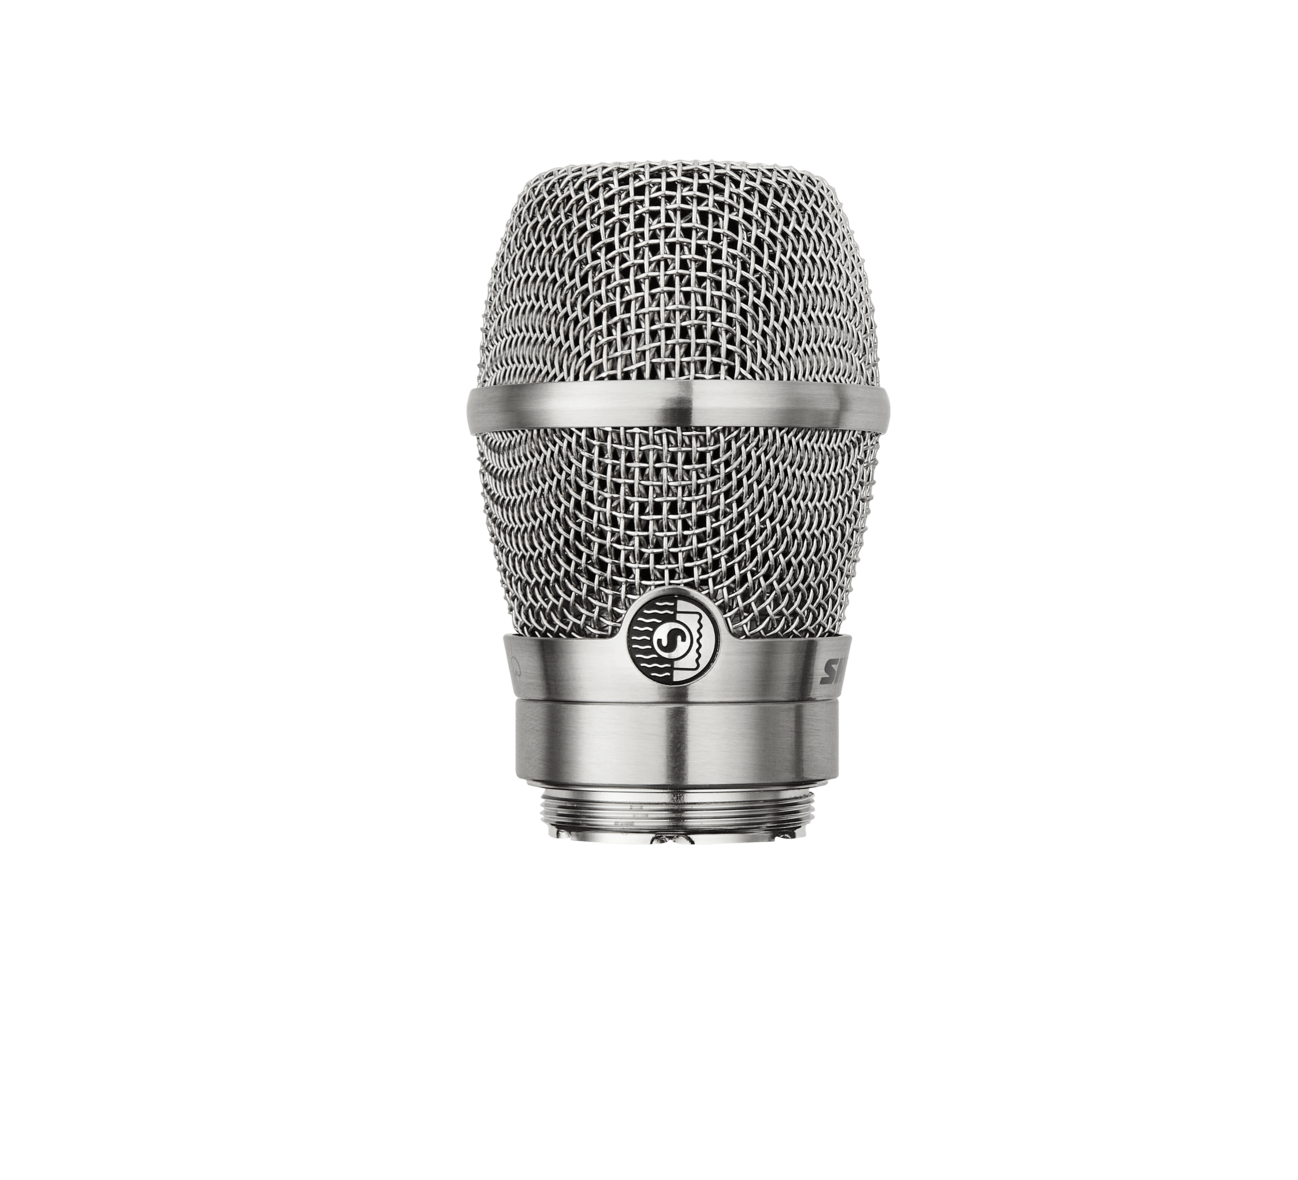 RPW194:Nickel premium wireless cardioid condenser vocal microphone capsule
